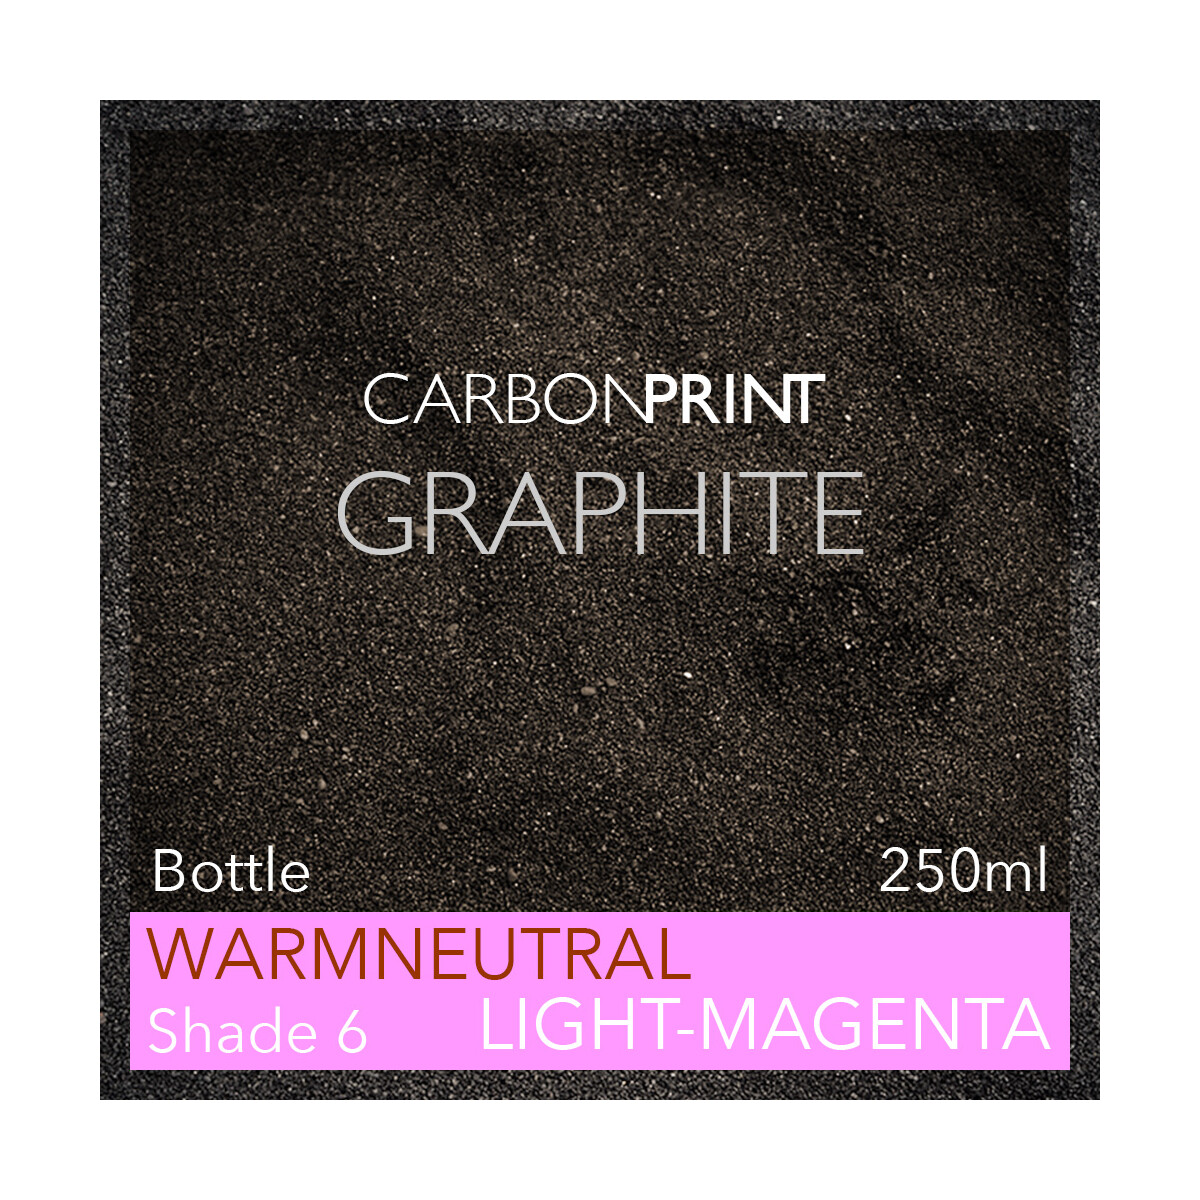 Carbonprint Graphite Shade6 Kanal LM Warmneutral 250ml